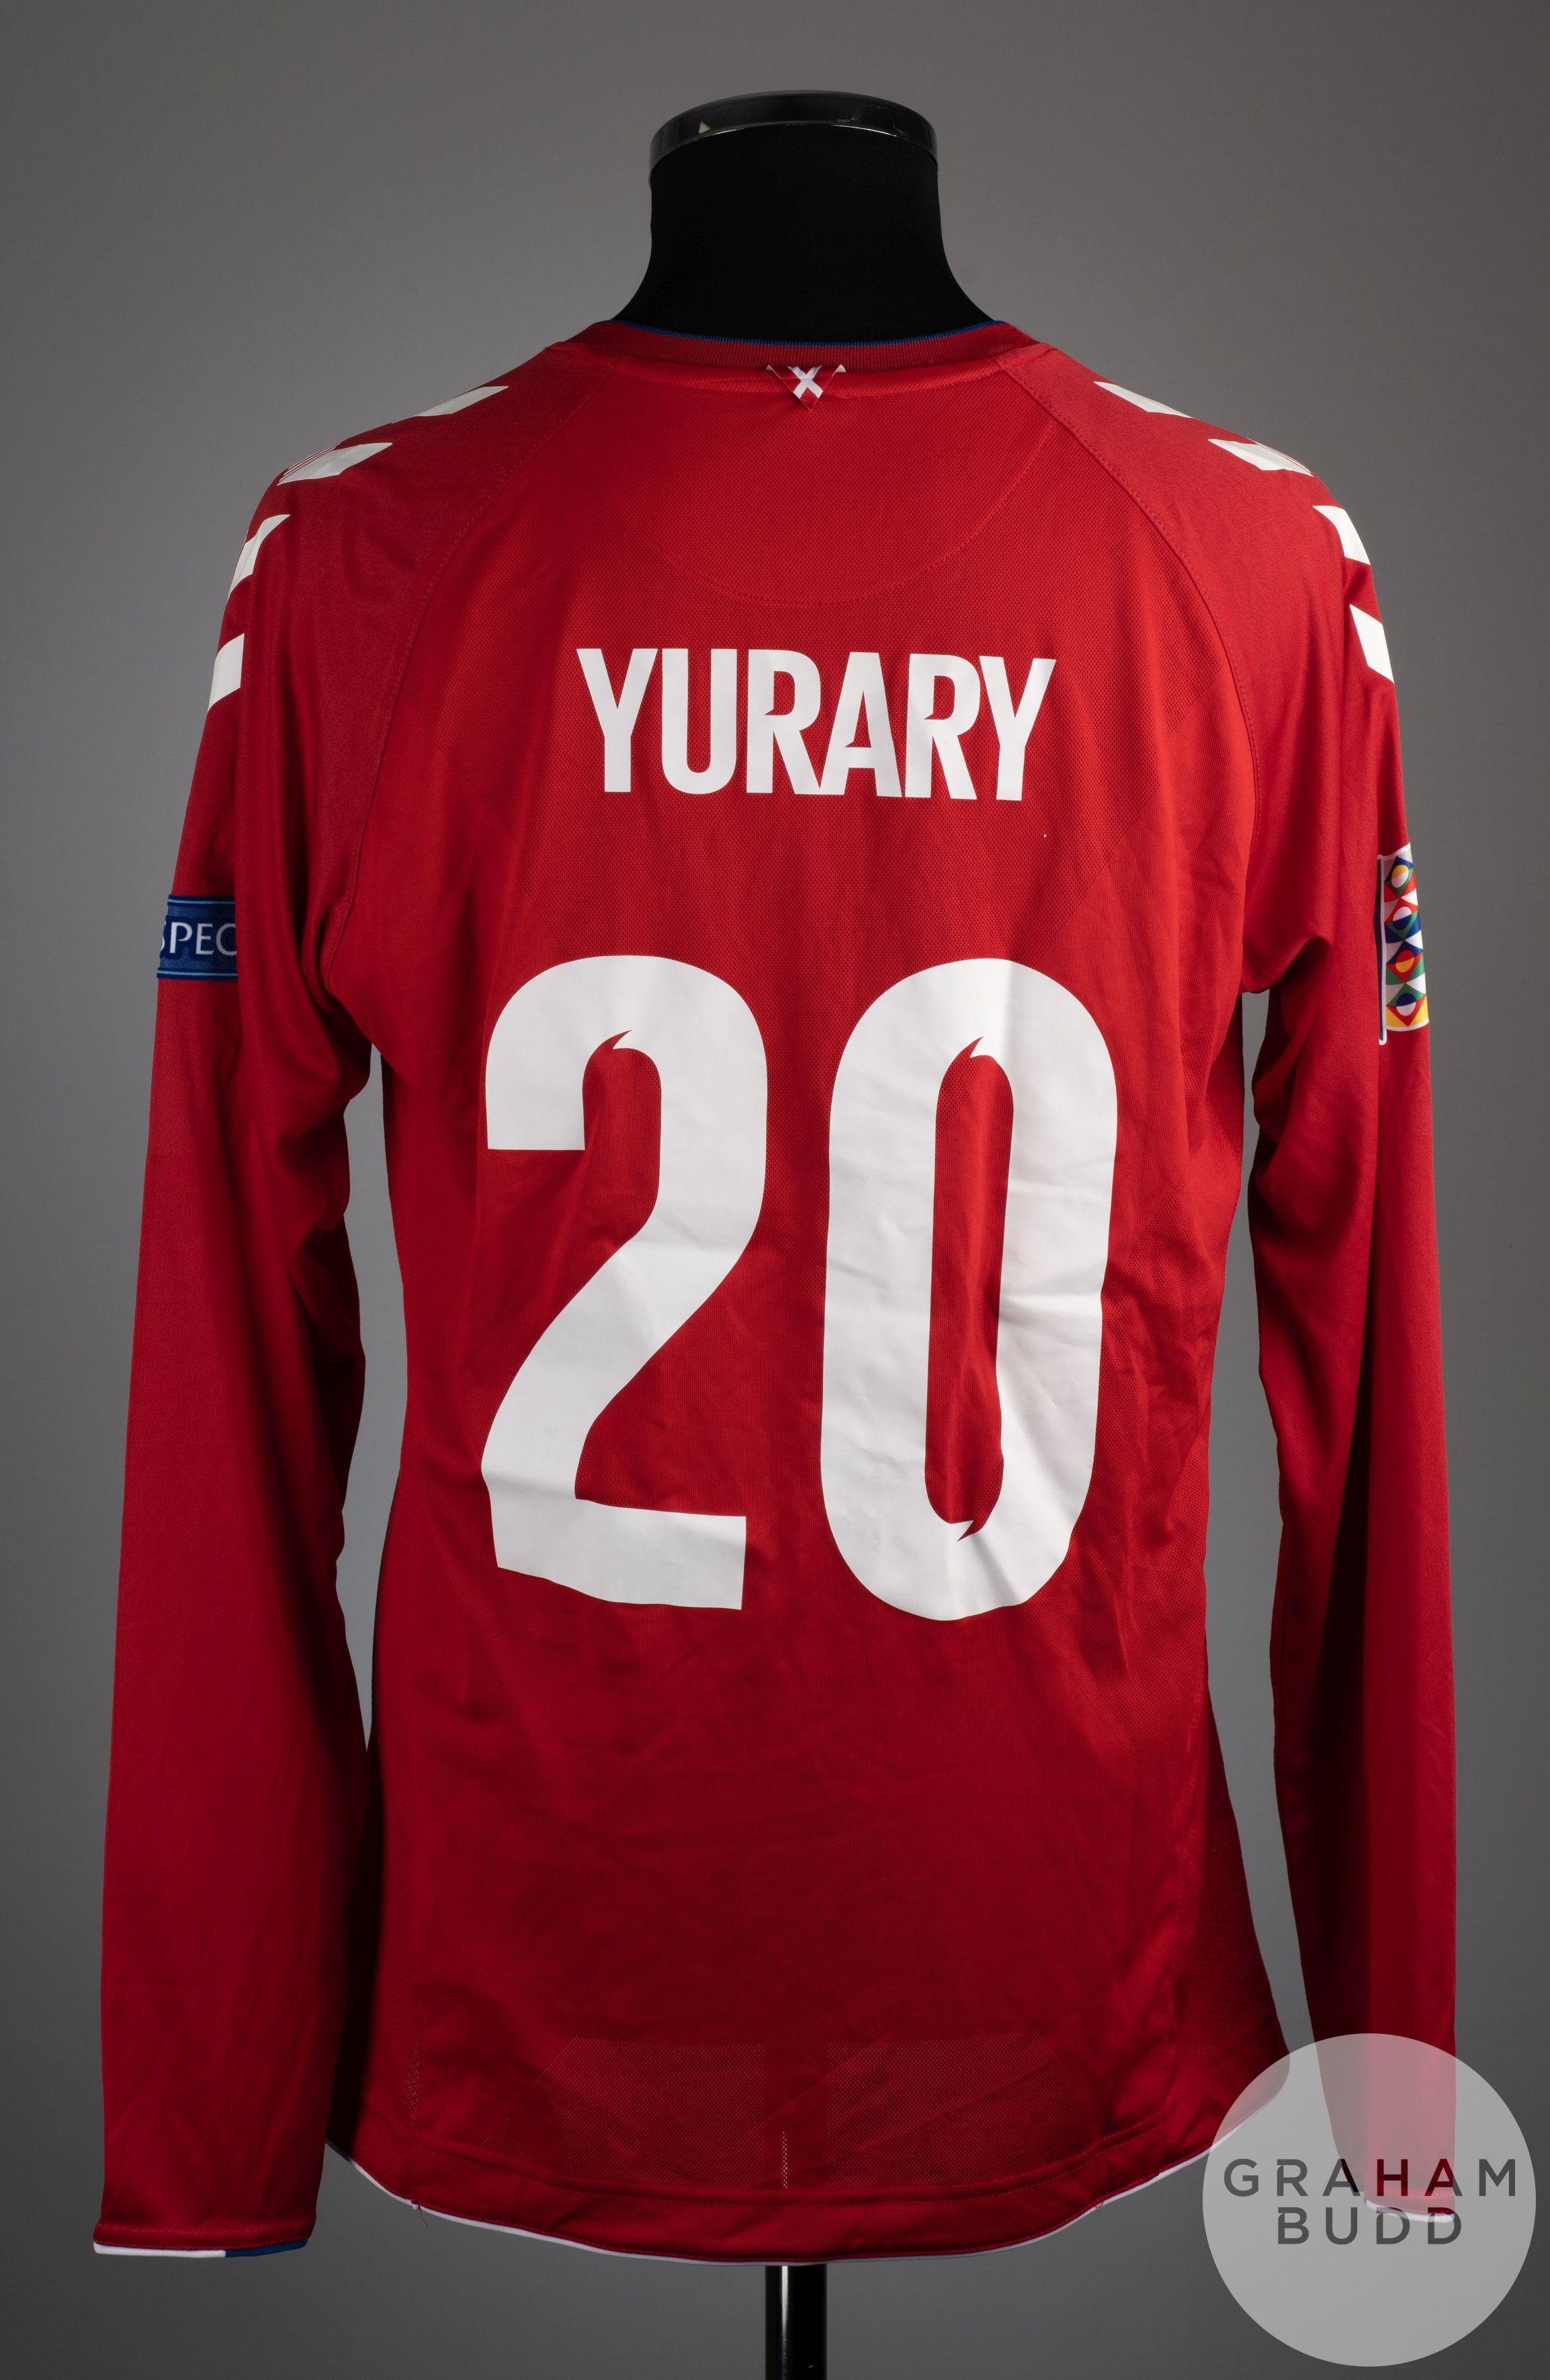 Yussuf Yurary Poulsen red No.20 Denmark long sleeved shirt, 2018 - Image 2 of 2